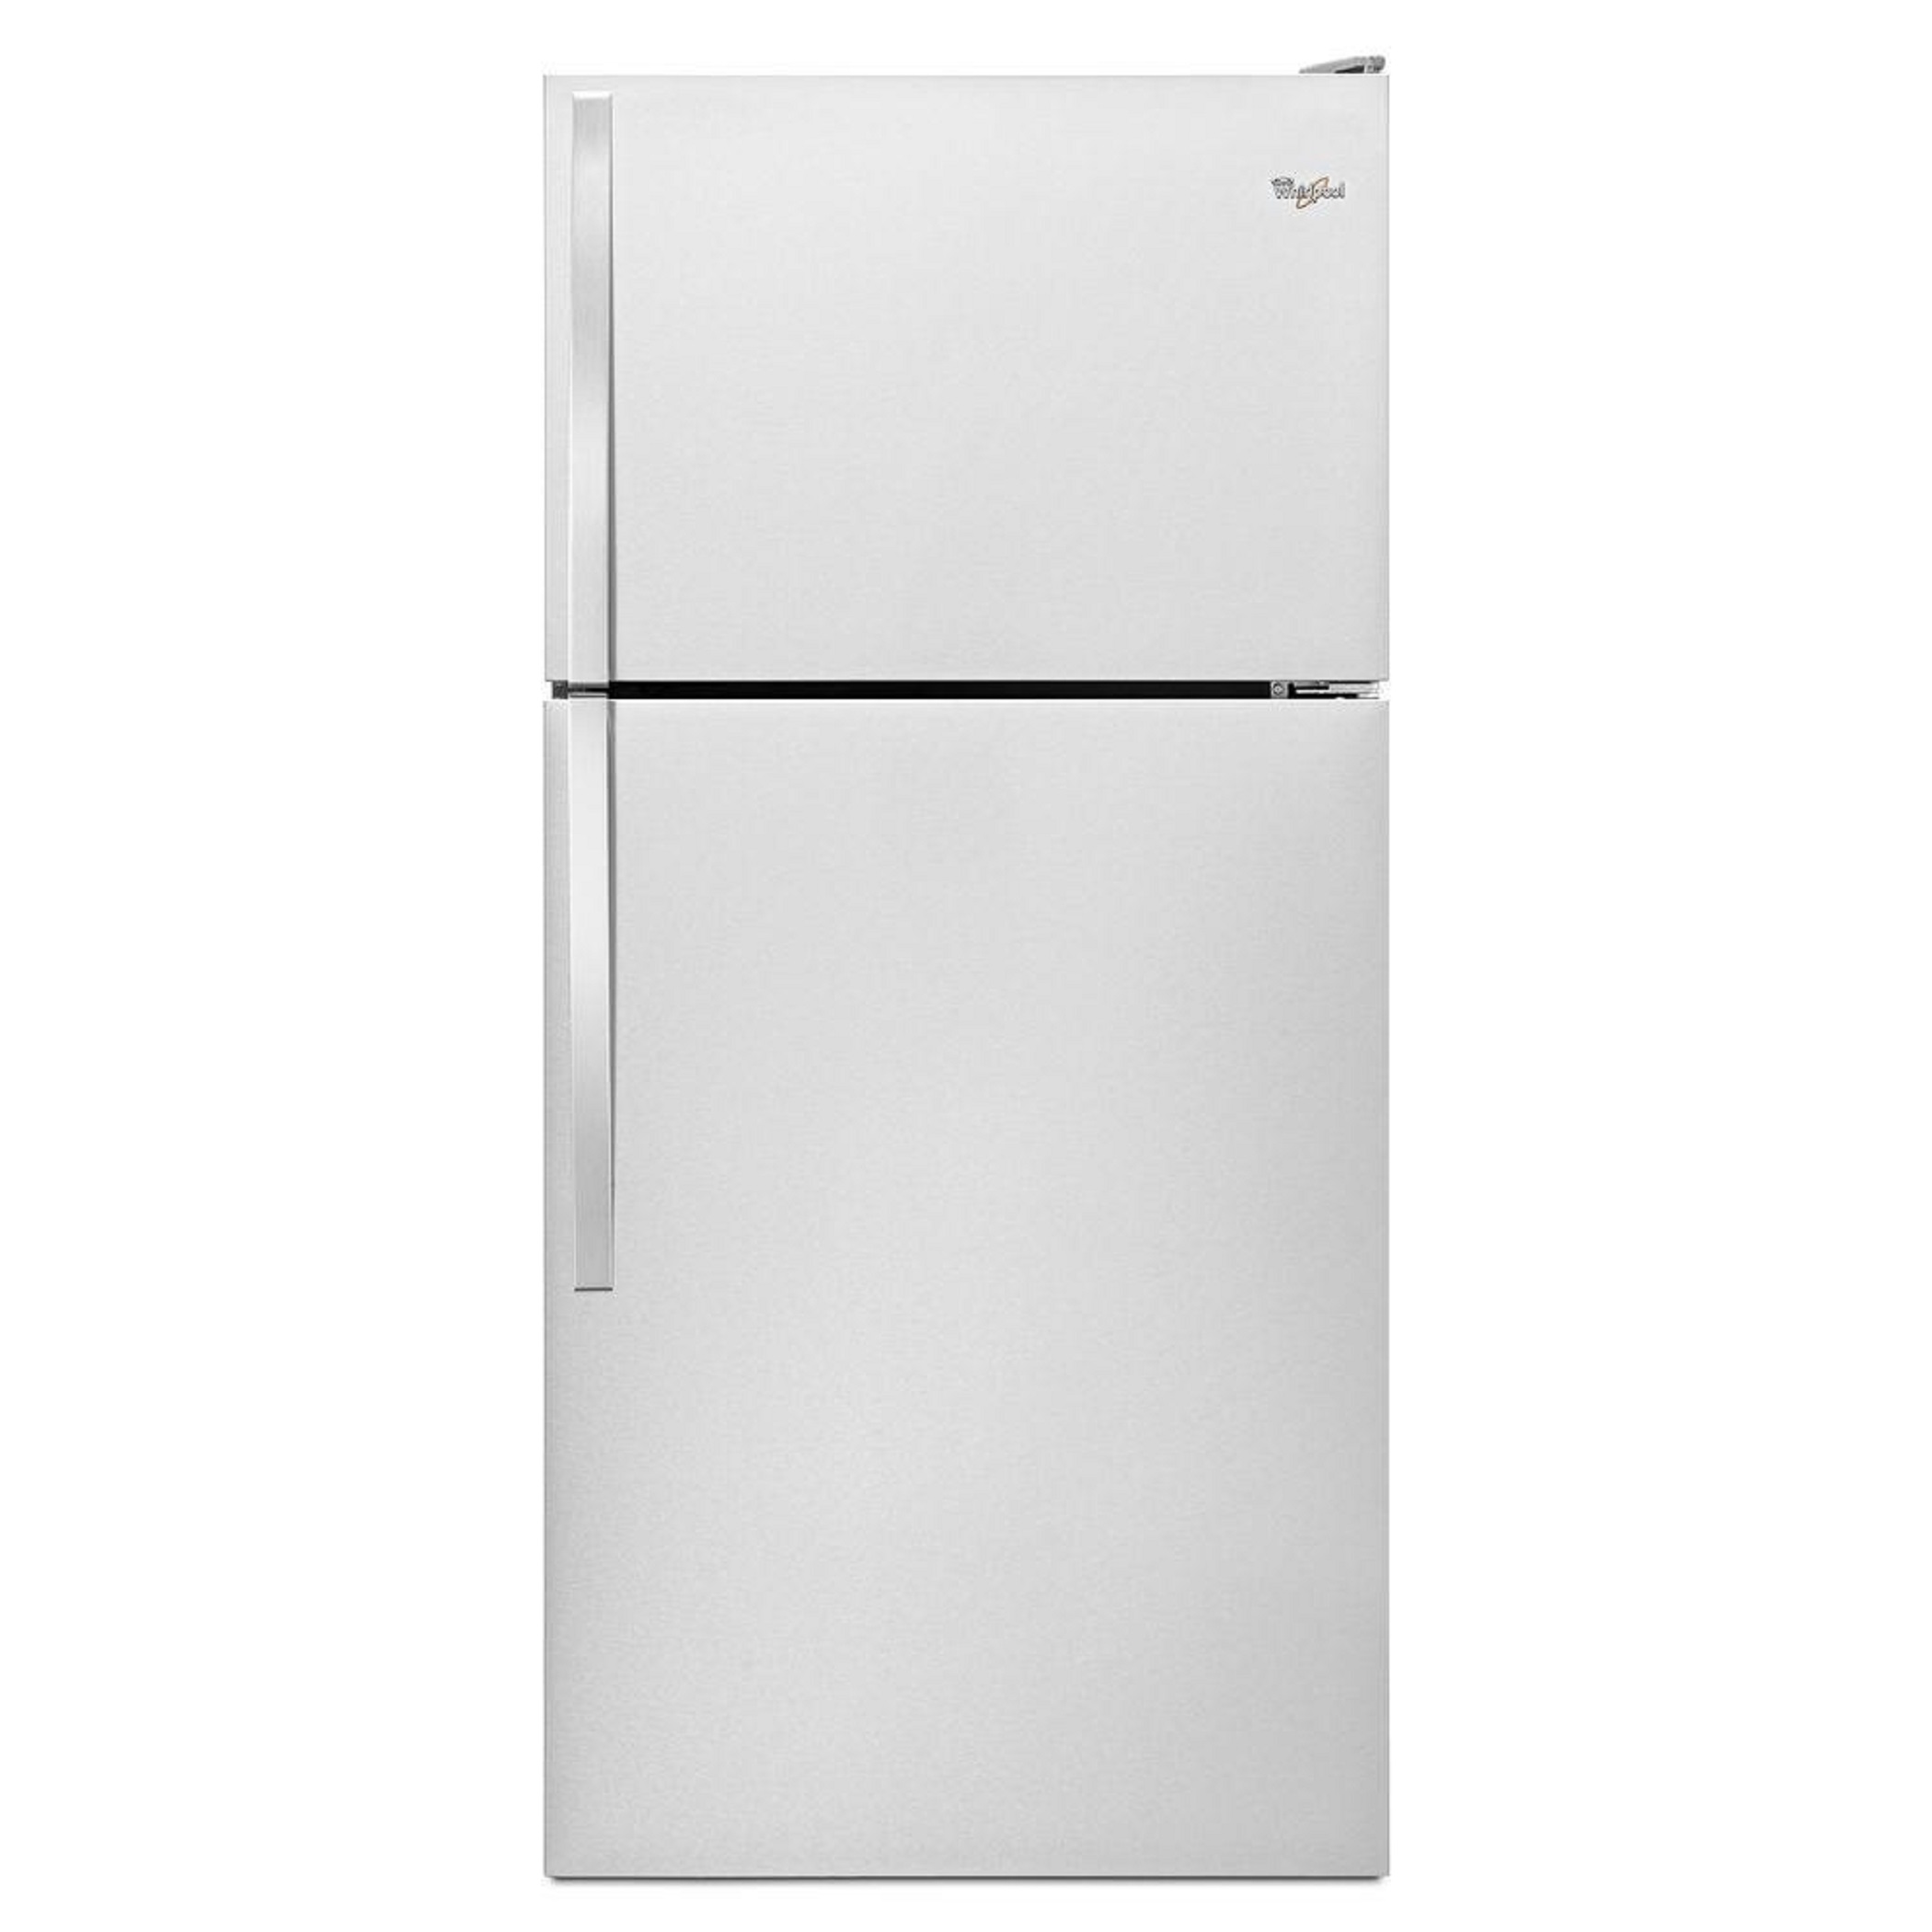 18 cubic foot refrigerator